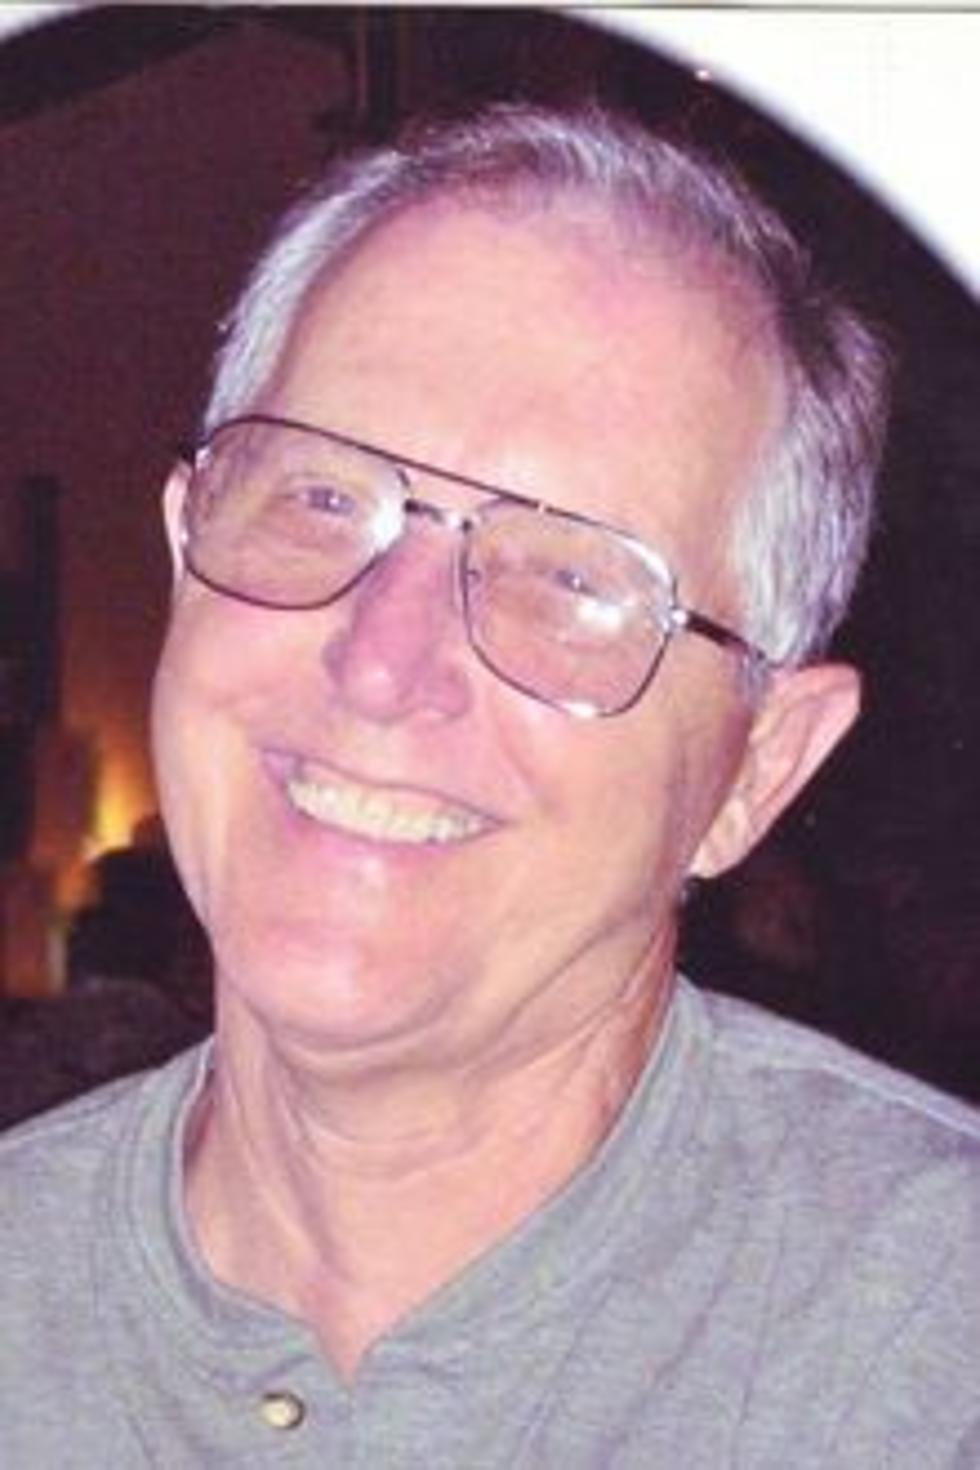 James J. Scherer, An Ekuzaville Resident, Dies at 79